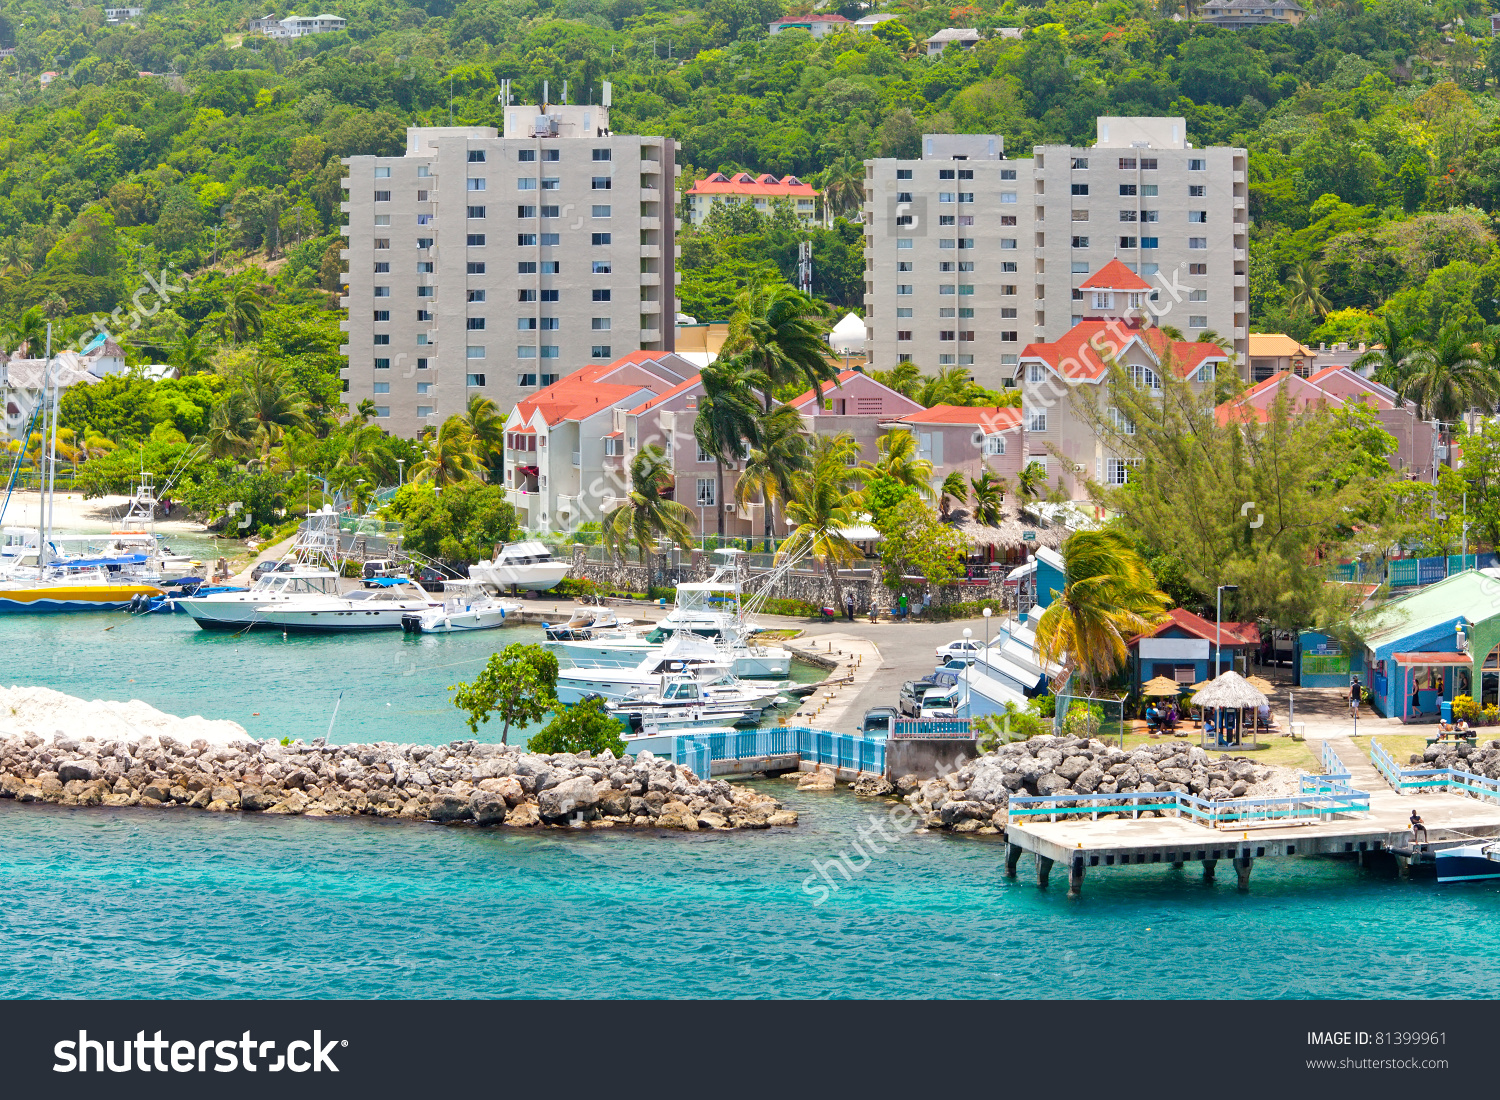 Town Center In Ocho Rios, Jamaica Stock Photo 81399961 : Shutterstock.